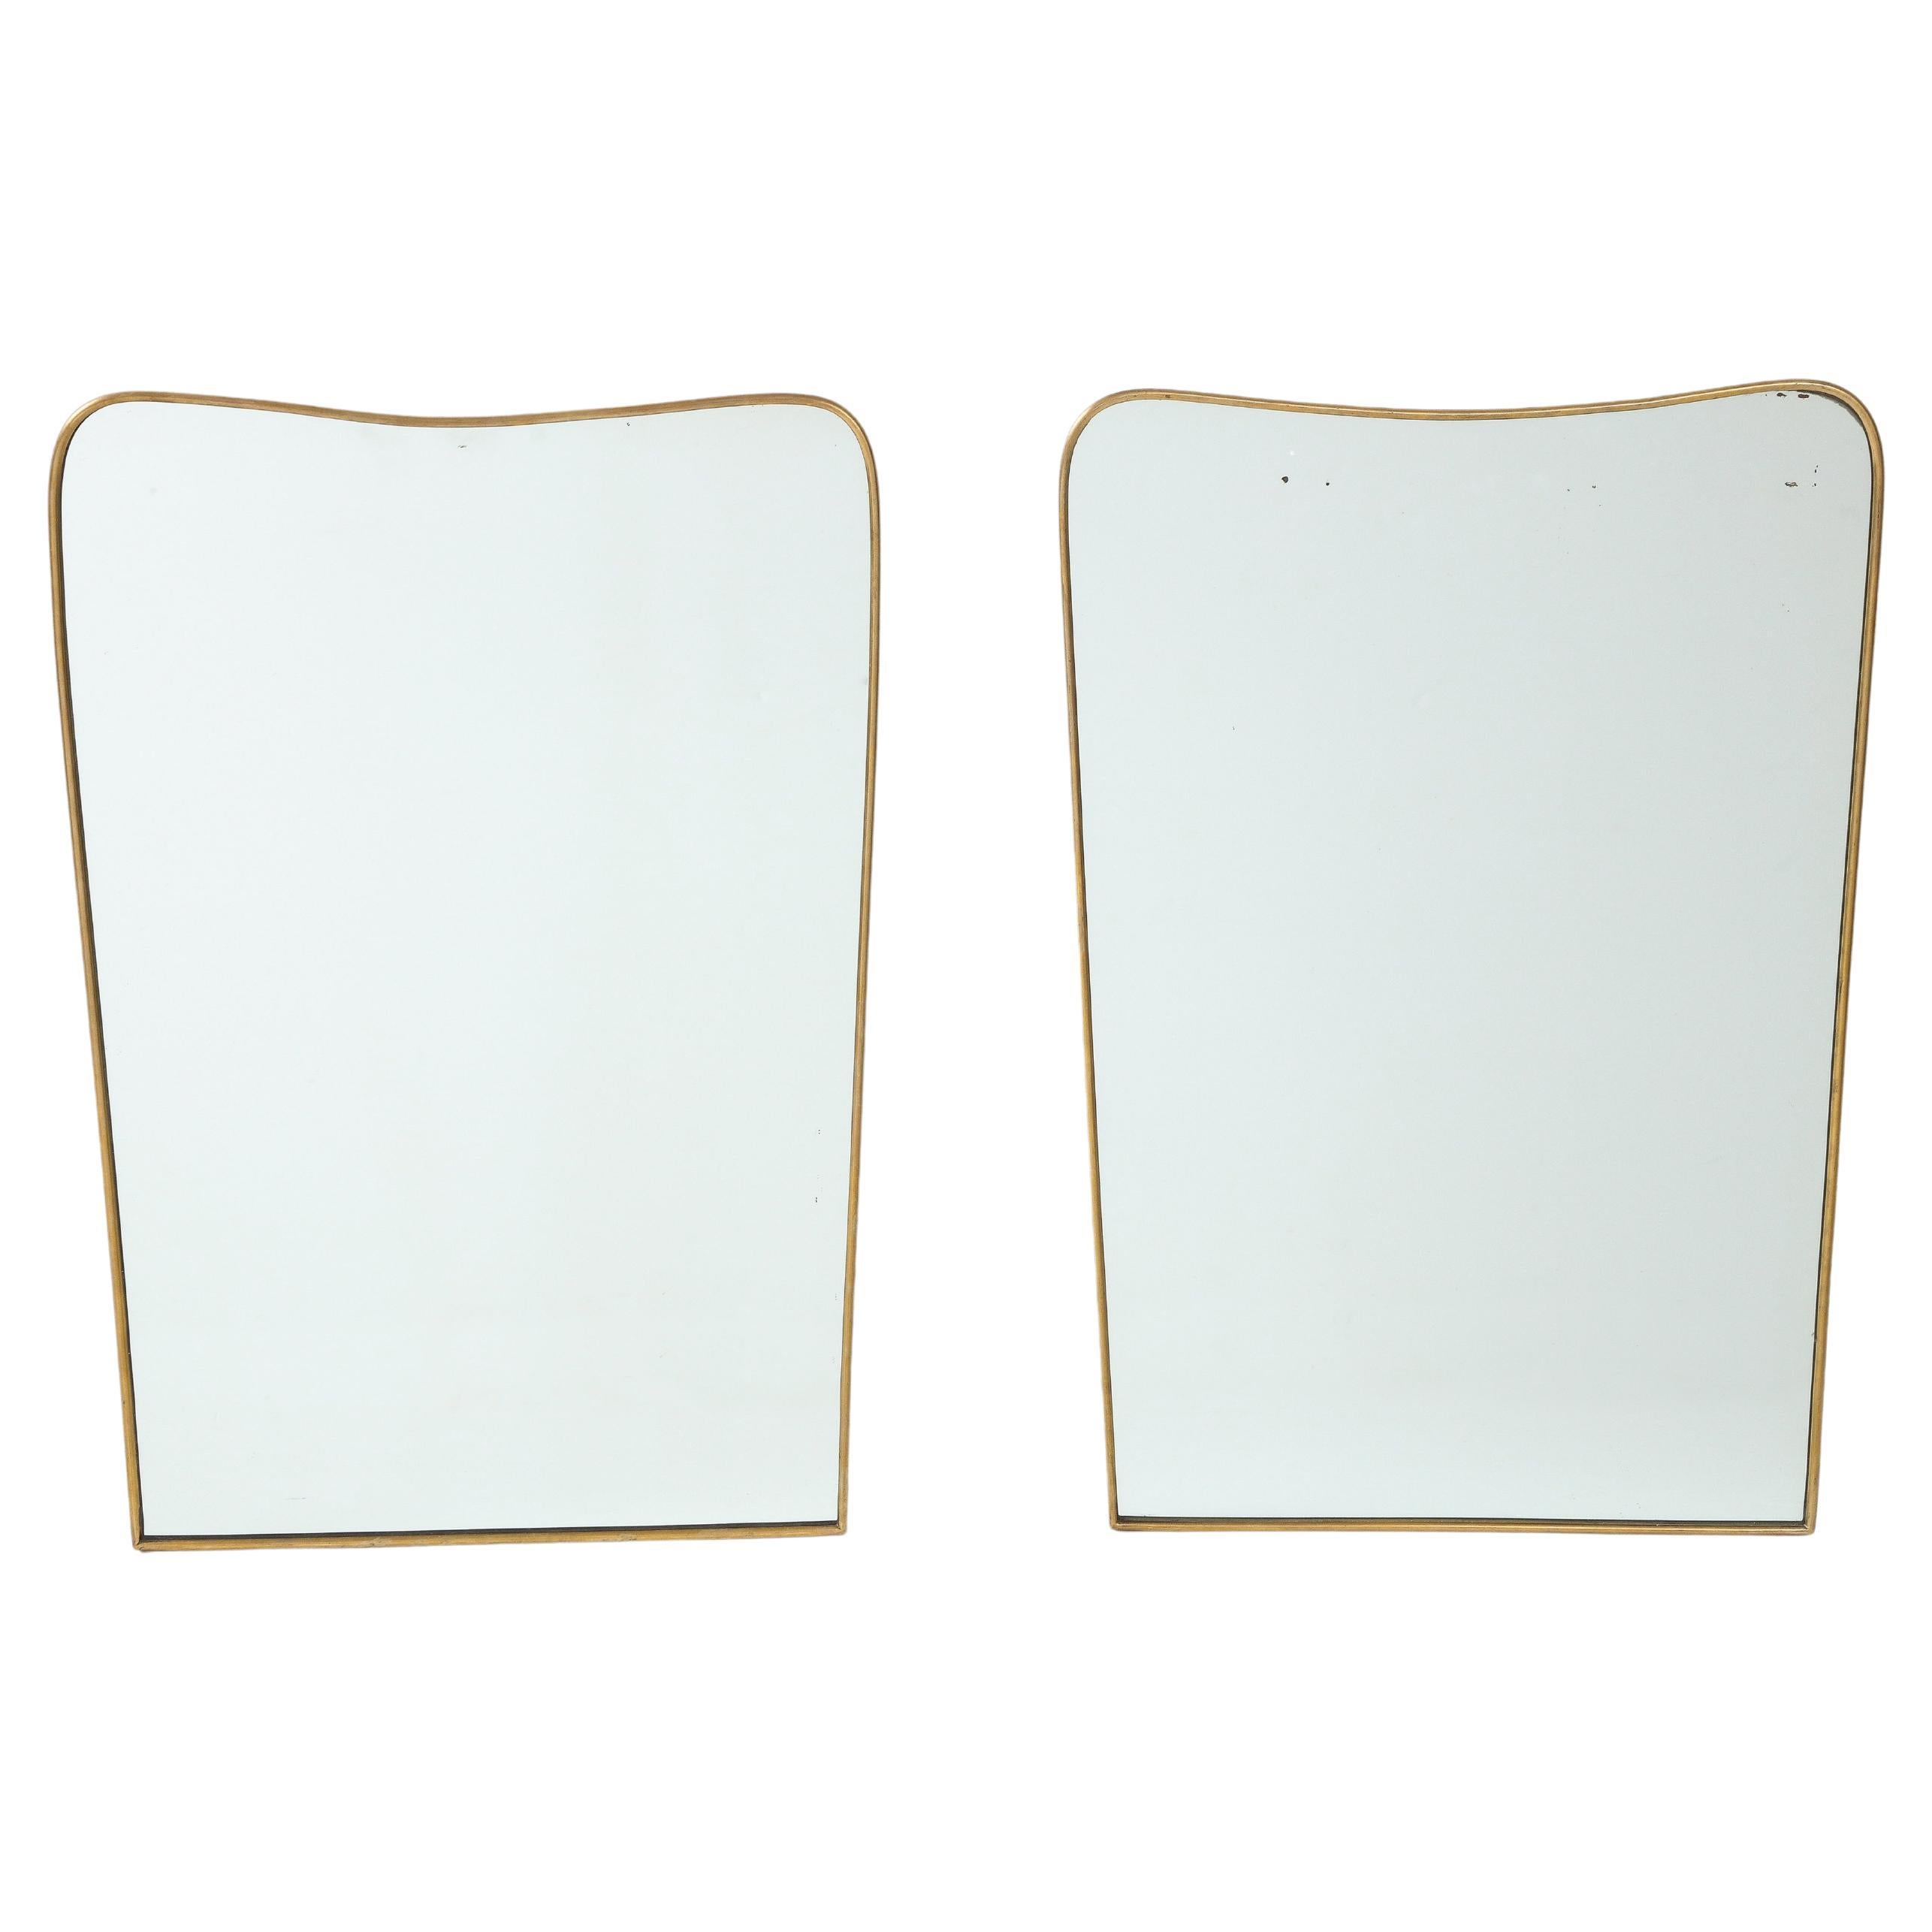 1950s Italian Modernist Pair of Shaped Brass Mirrors